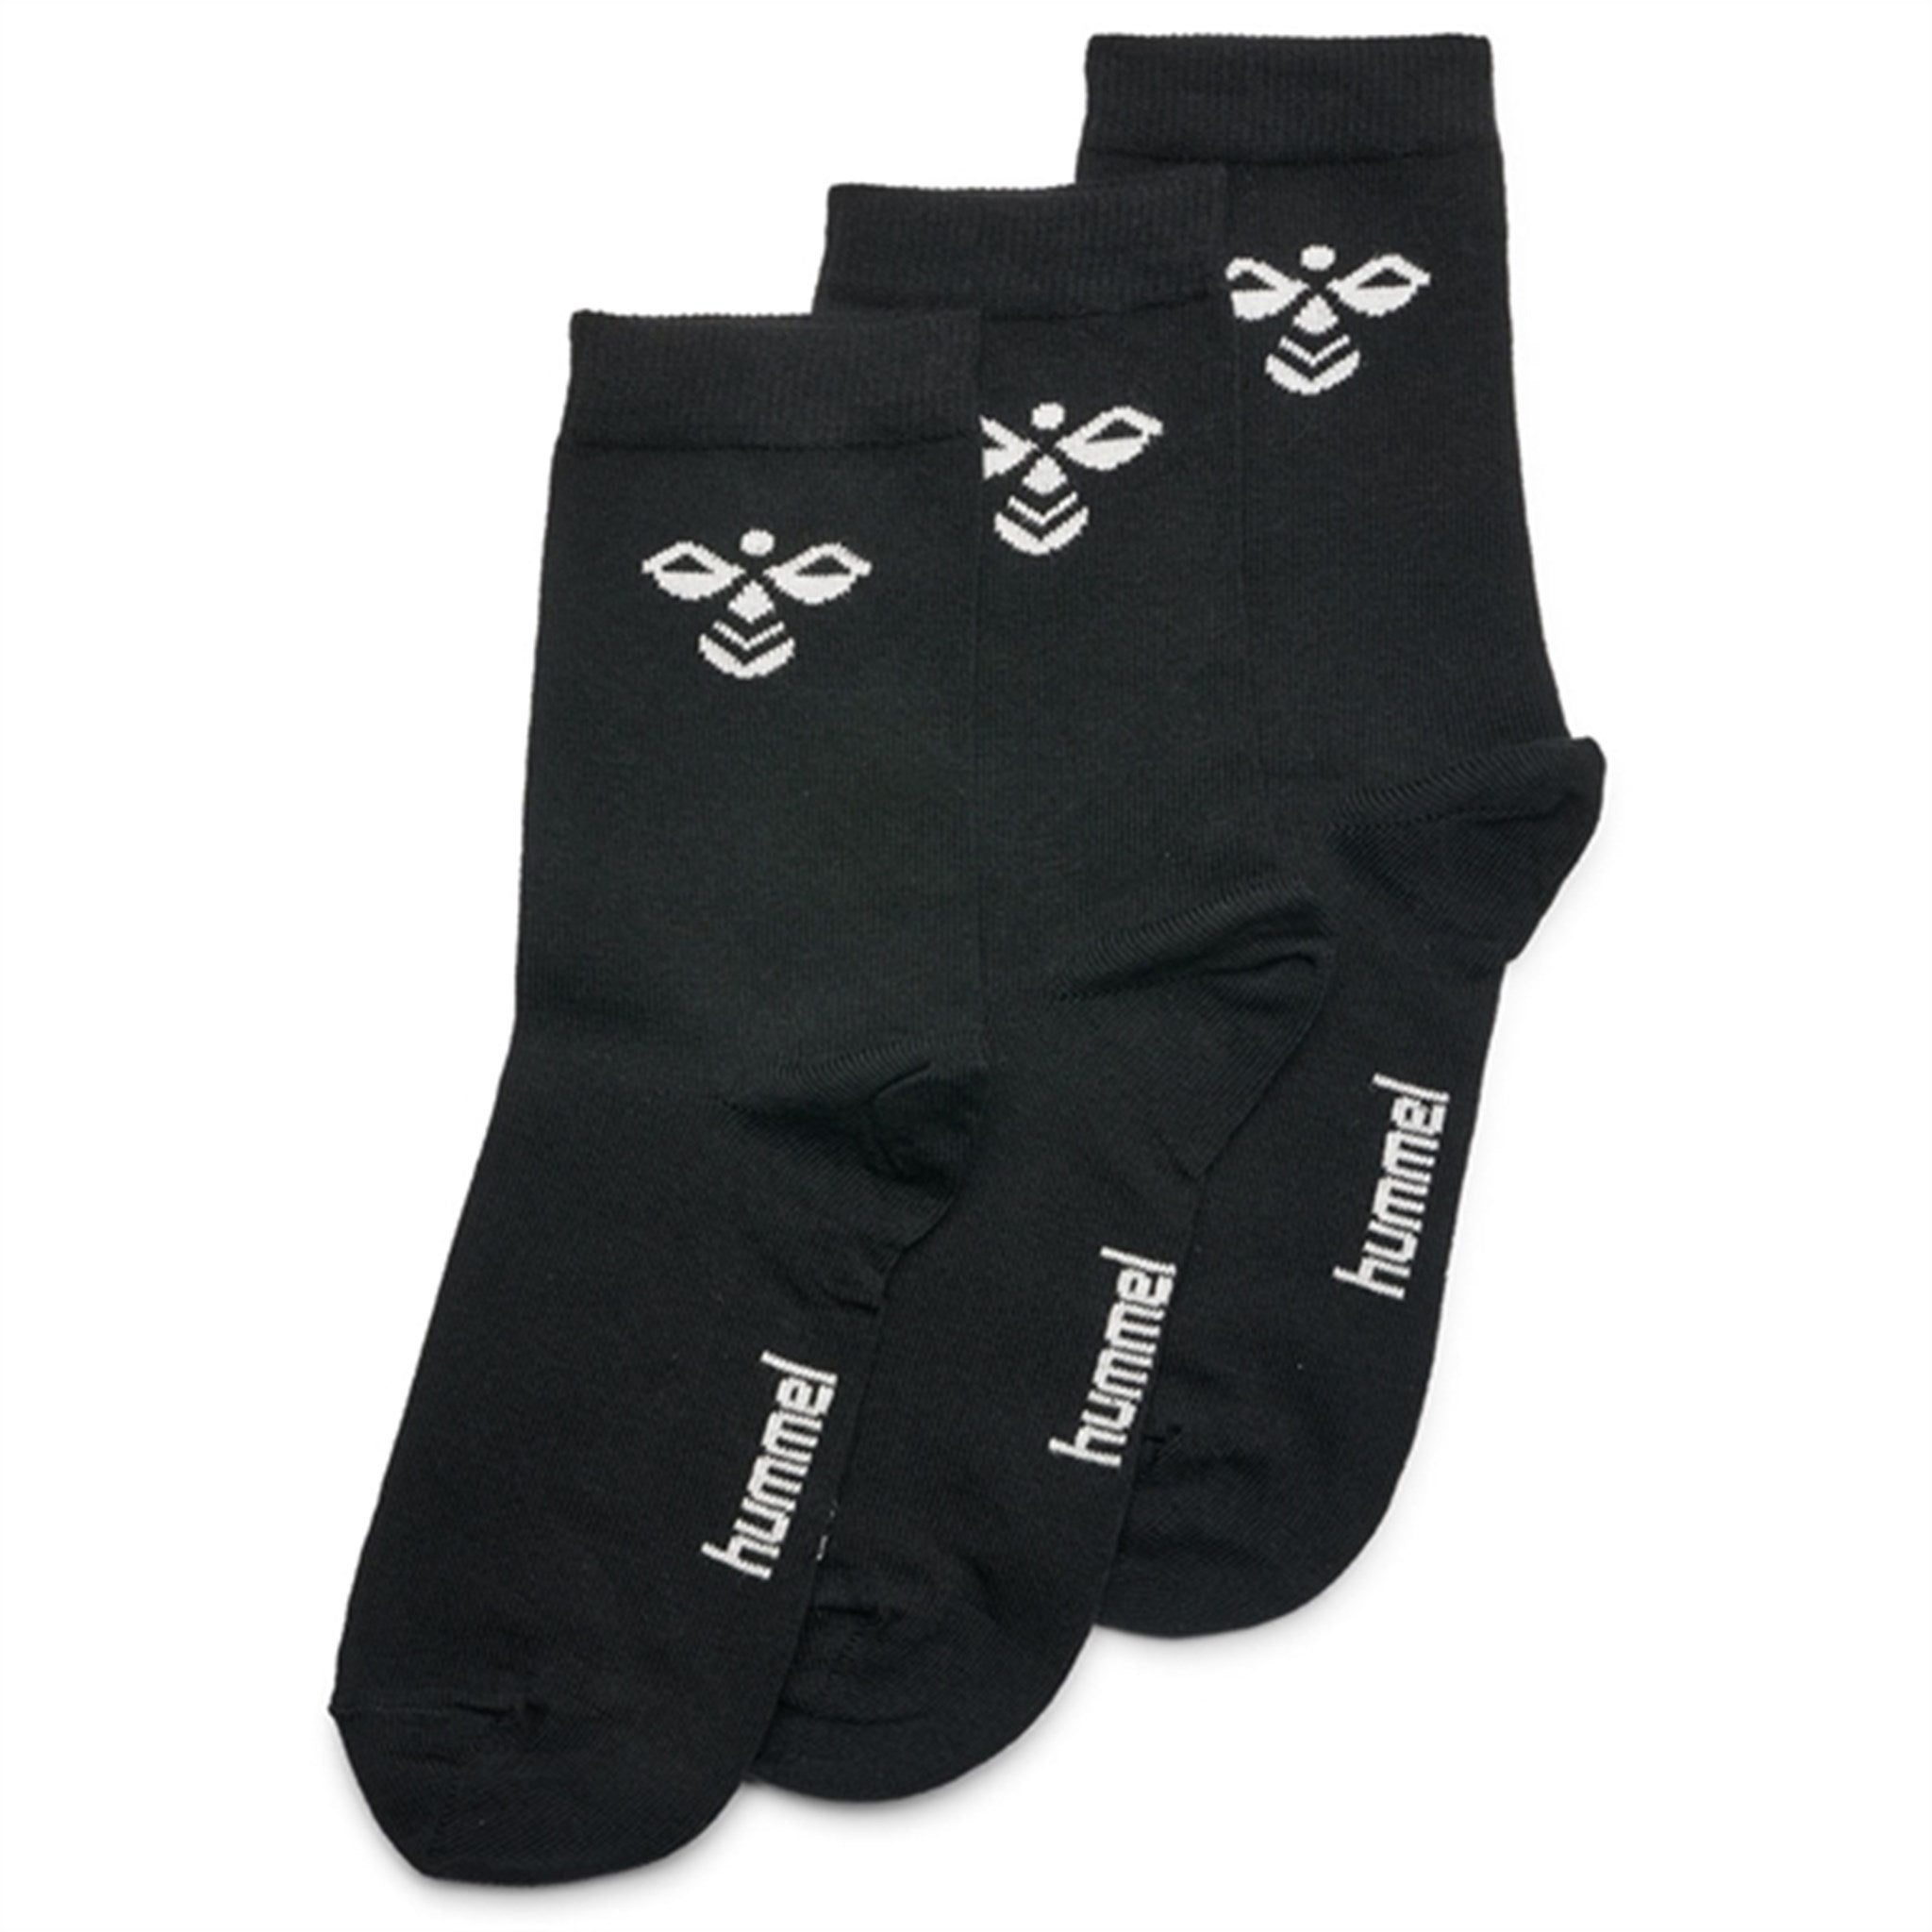 Hummel Black Sutton Socks 3-Pack